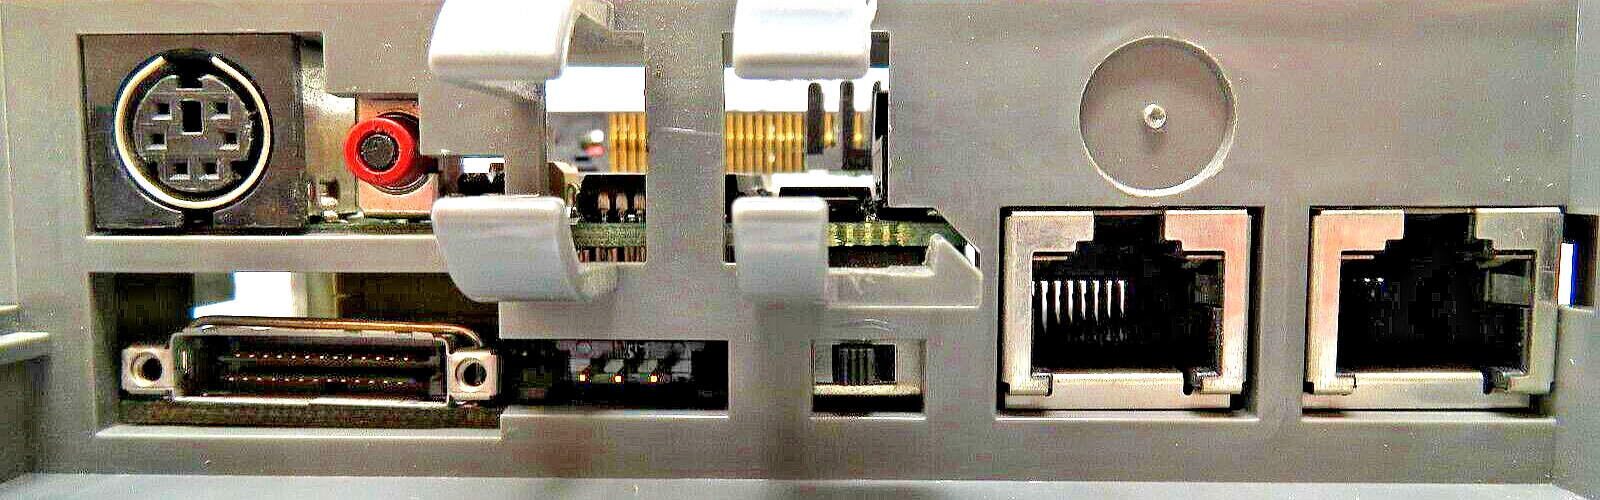 Allen-Bradley 1747-OCEEEBA SLC 500 Open Controller CPU Module